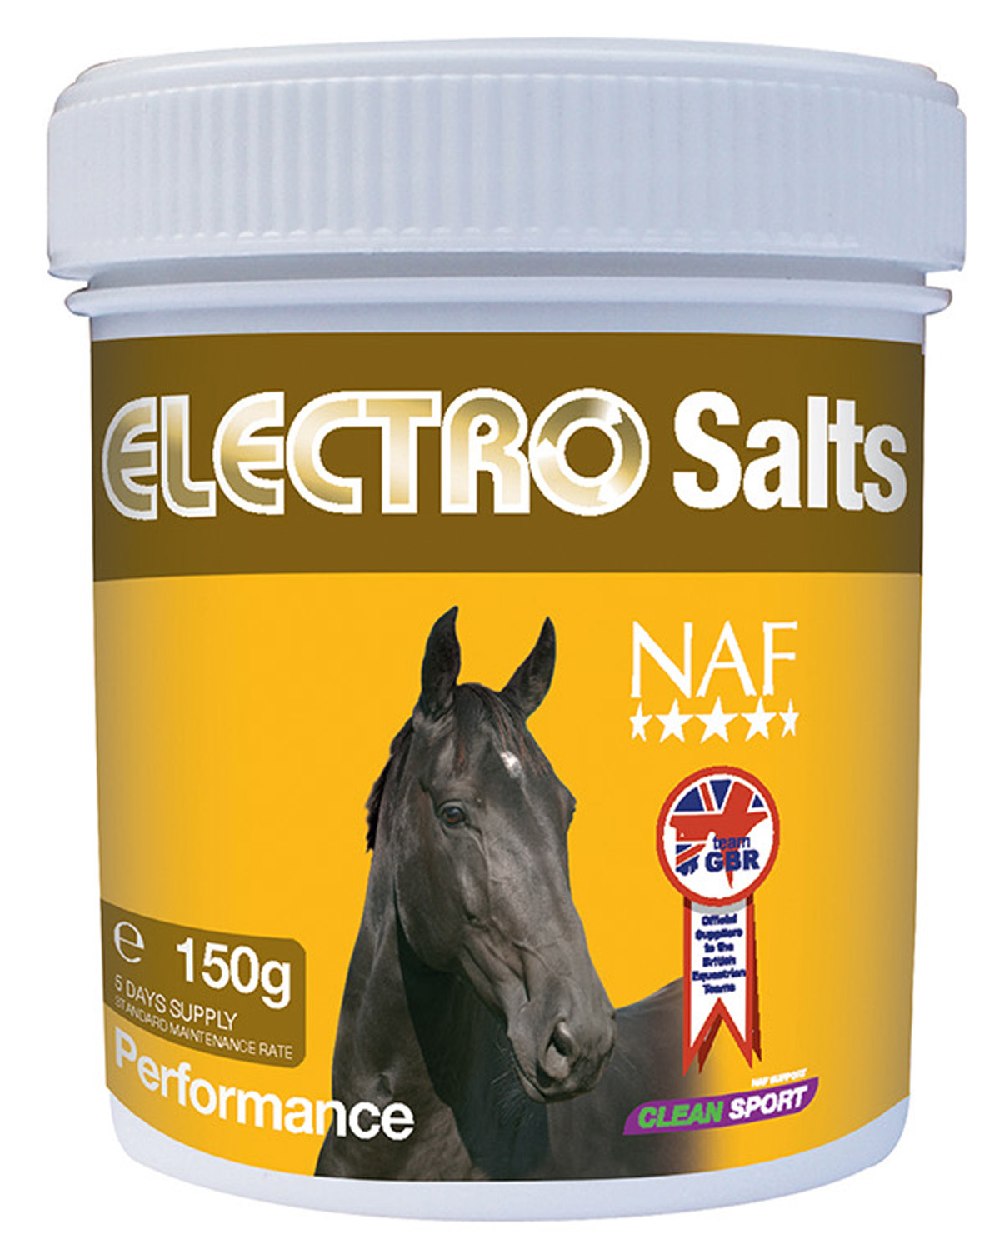 NAF Electro Salts 150g on white background